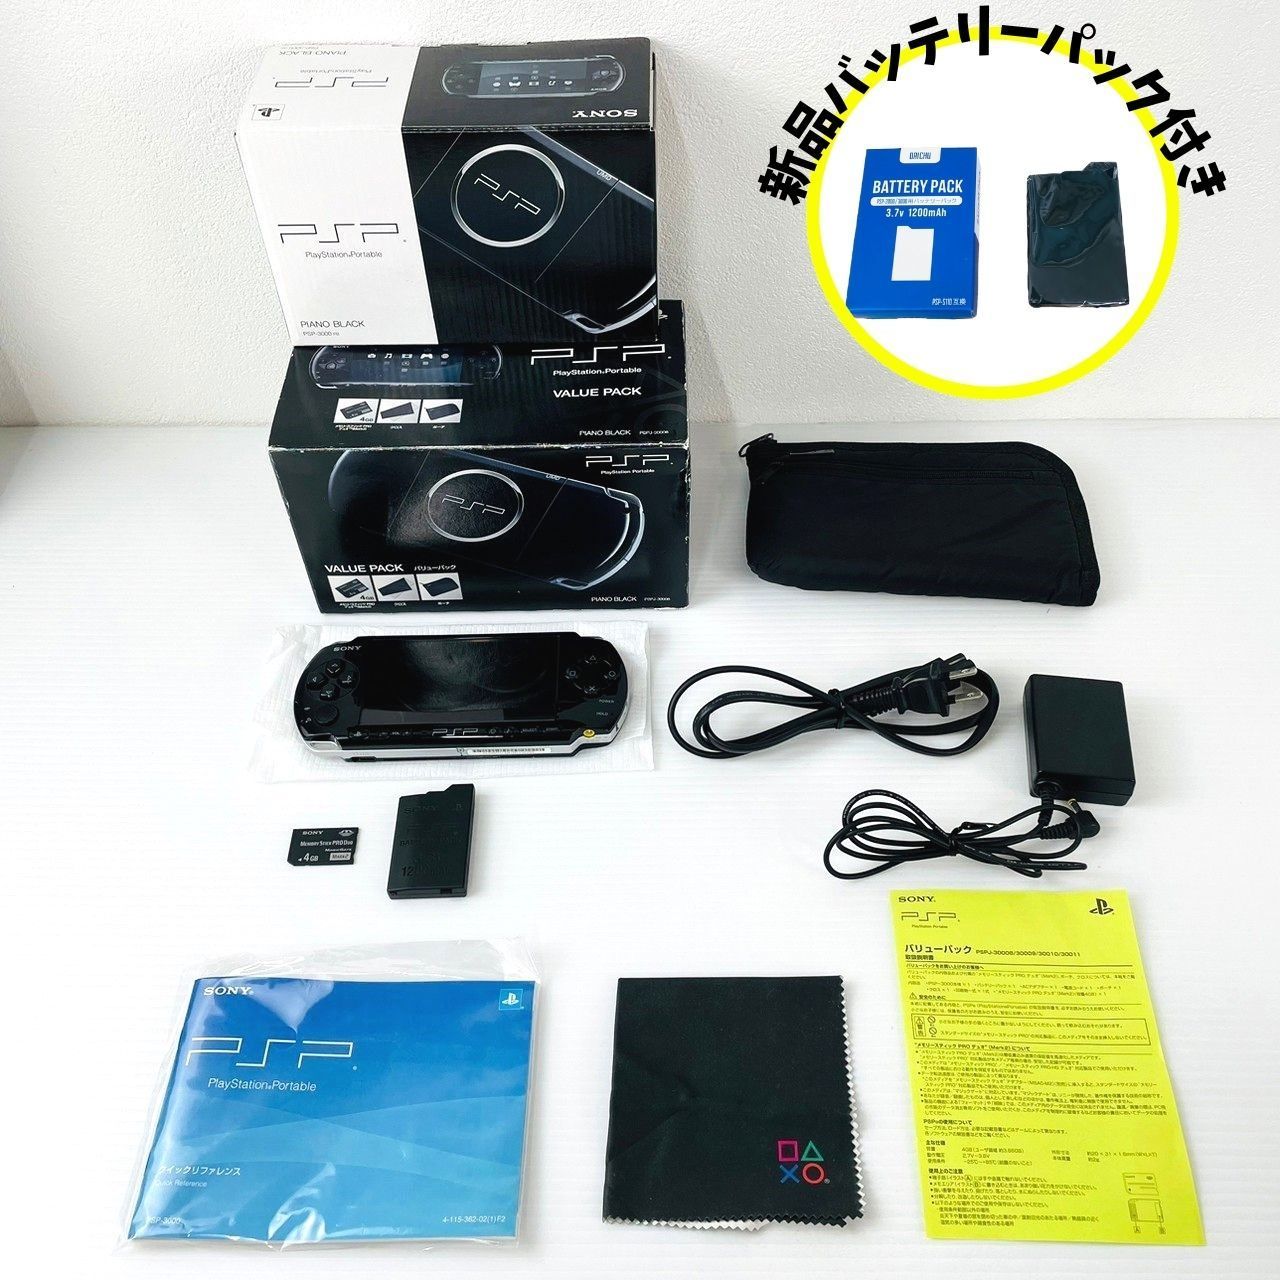 SONY プレイステーションポータブル PSP-3000 バリューパック 黒ソニー